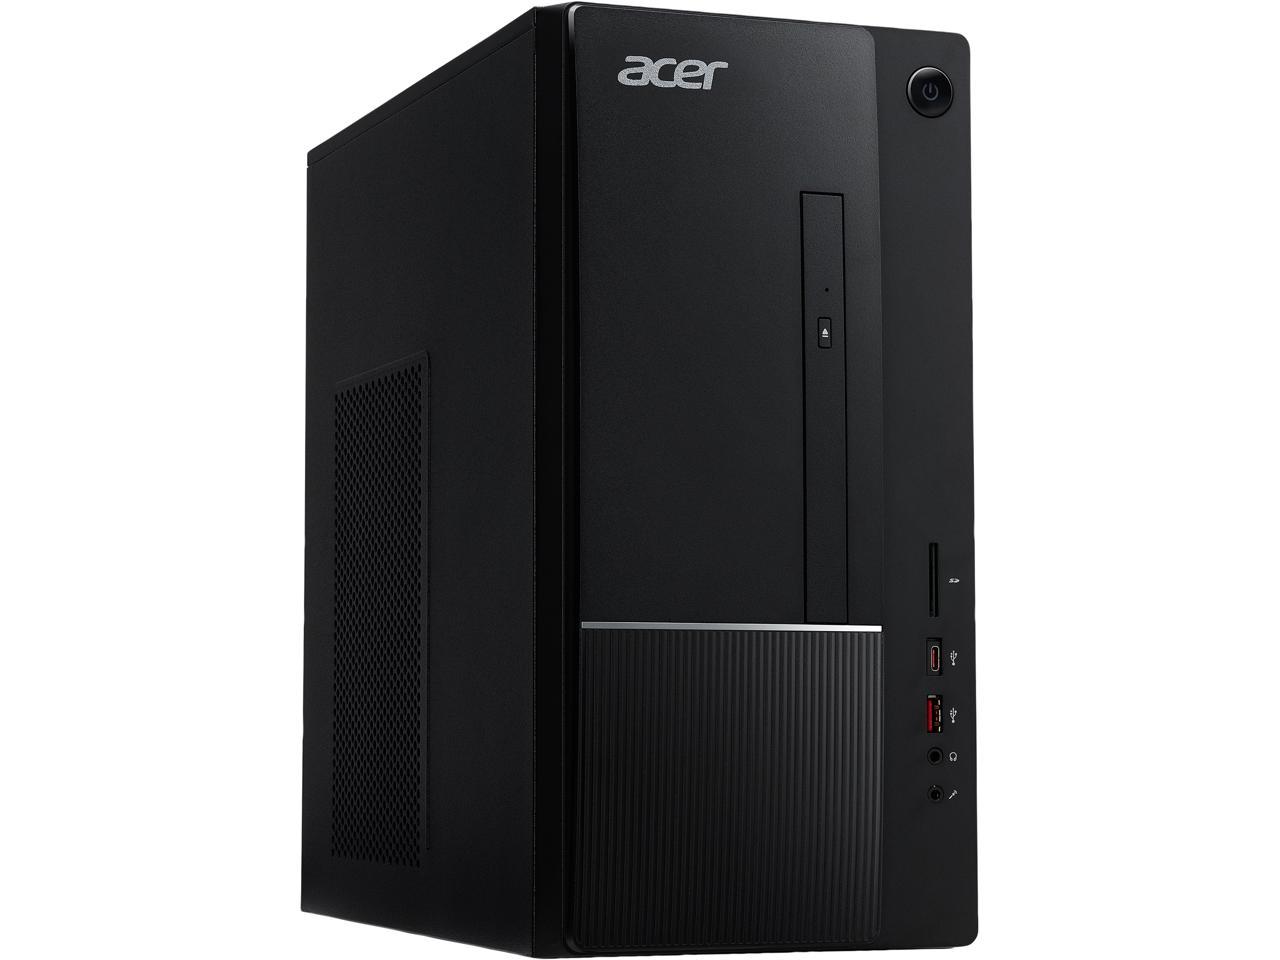 Acer Desktop Computer Aspire T TC-865-NESelecti5 Intel Core i5 8th Gen 8400 (2.80 GHz) 8 GB DDR4 1 TB HDD Intel UHD Graphics 630 Windows 10 Home 64-bit